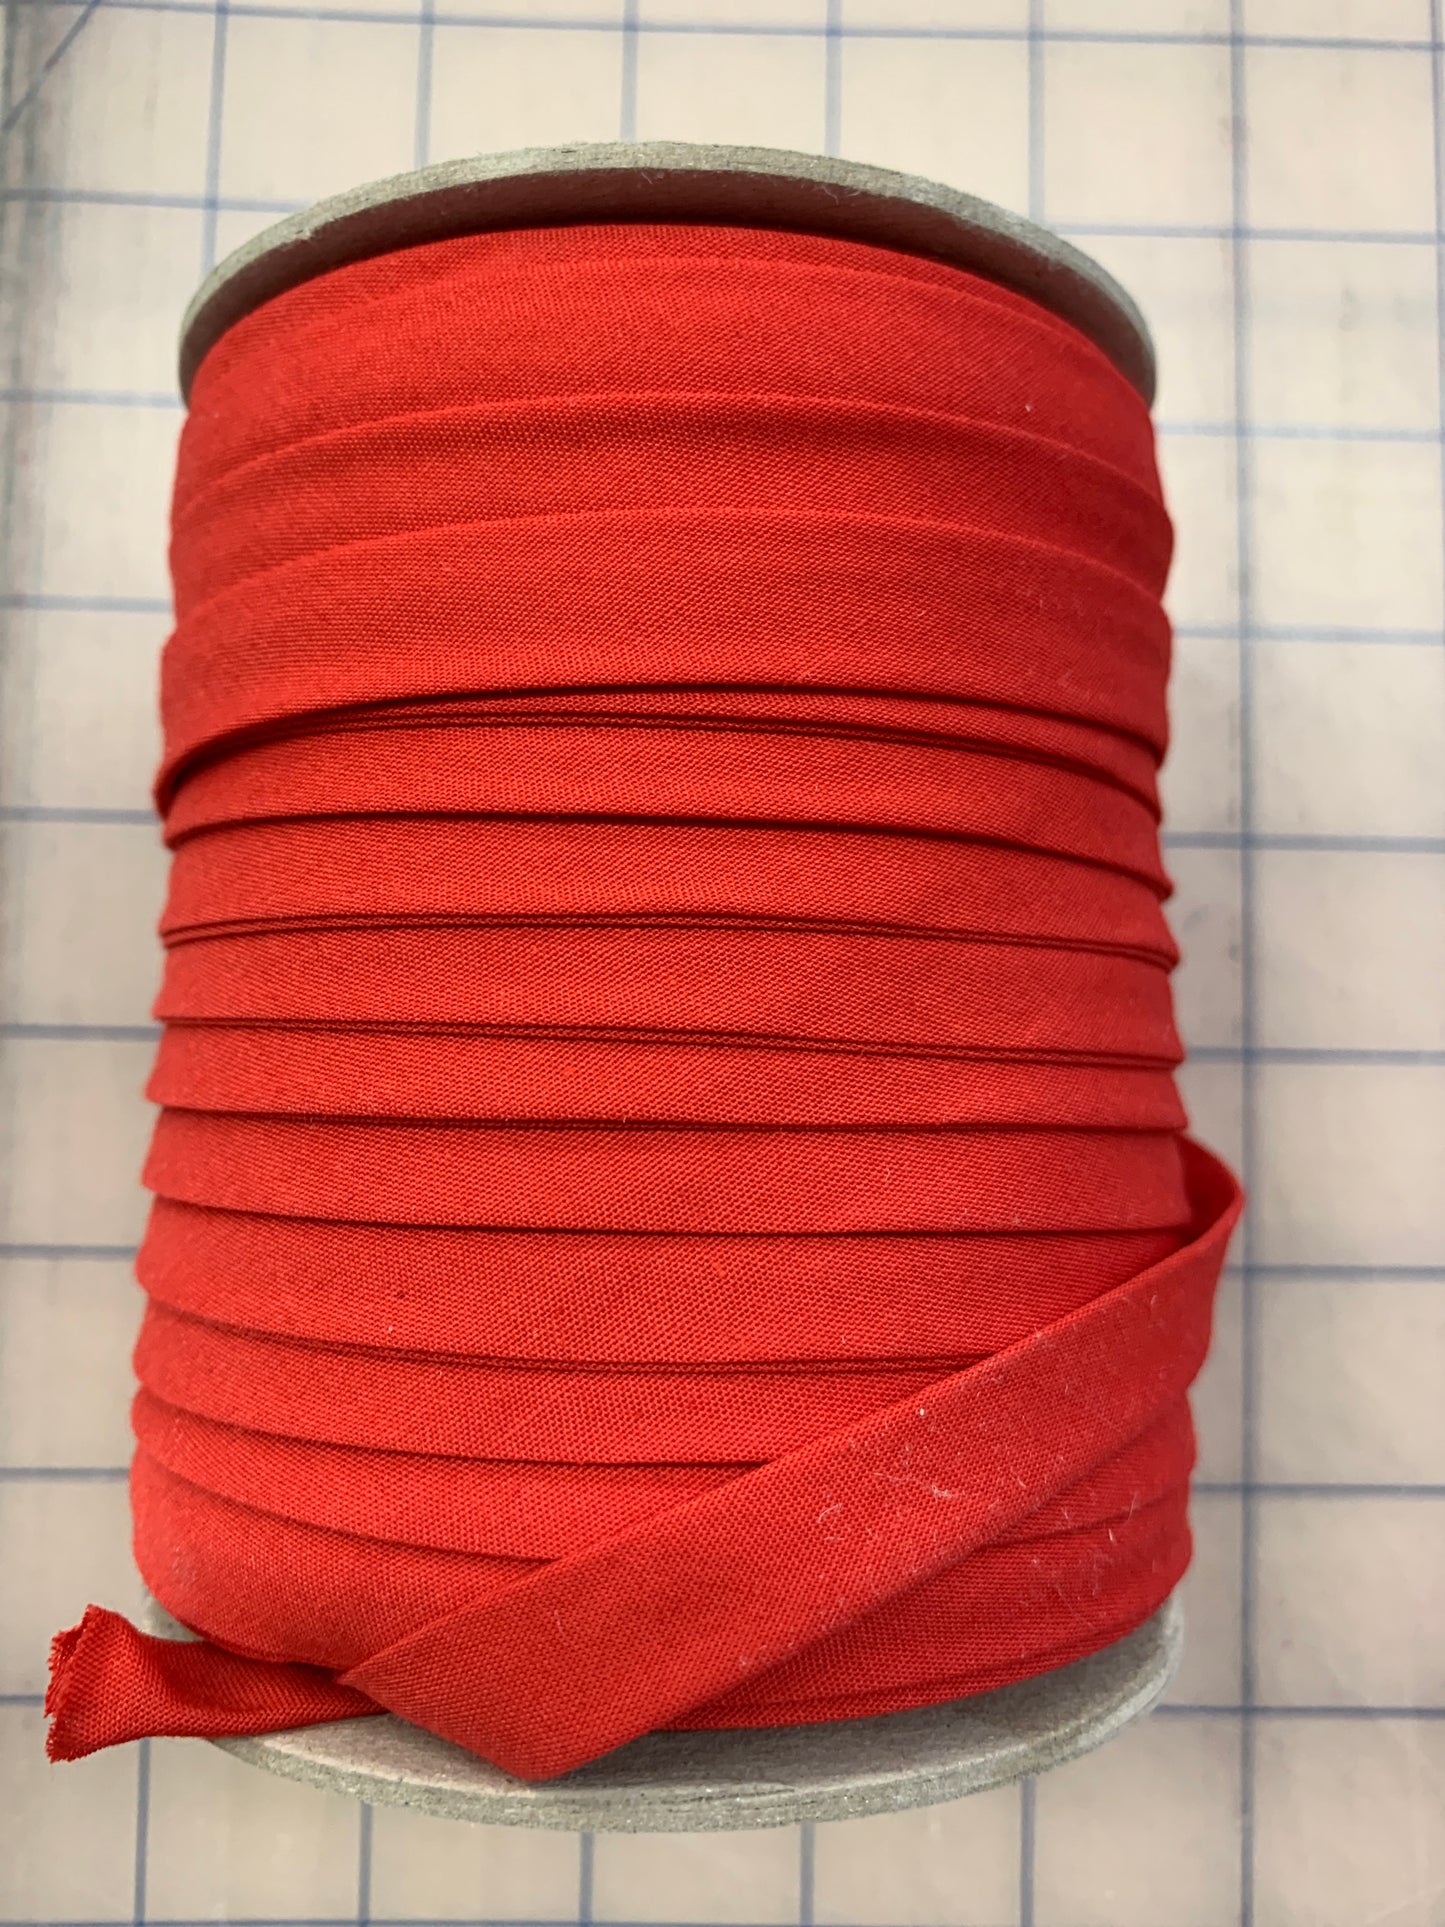 Poly Cotton Bias 13mm 629 008 Red $1.12/m